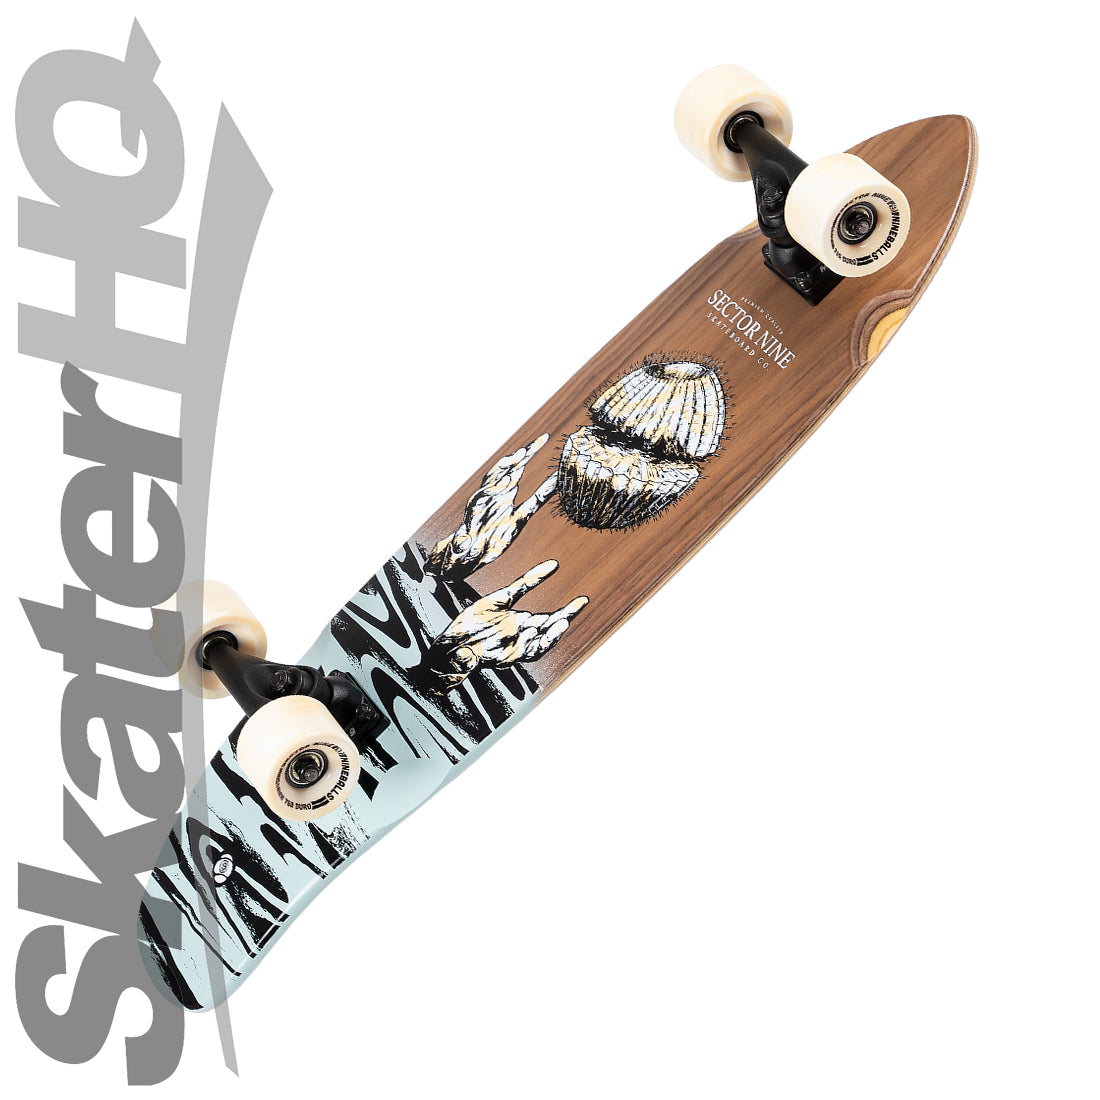 Sector 9 Hopper Handplant 7.5x27.5 Complete - Wood/Teal Skateboard Compl Cruisers